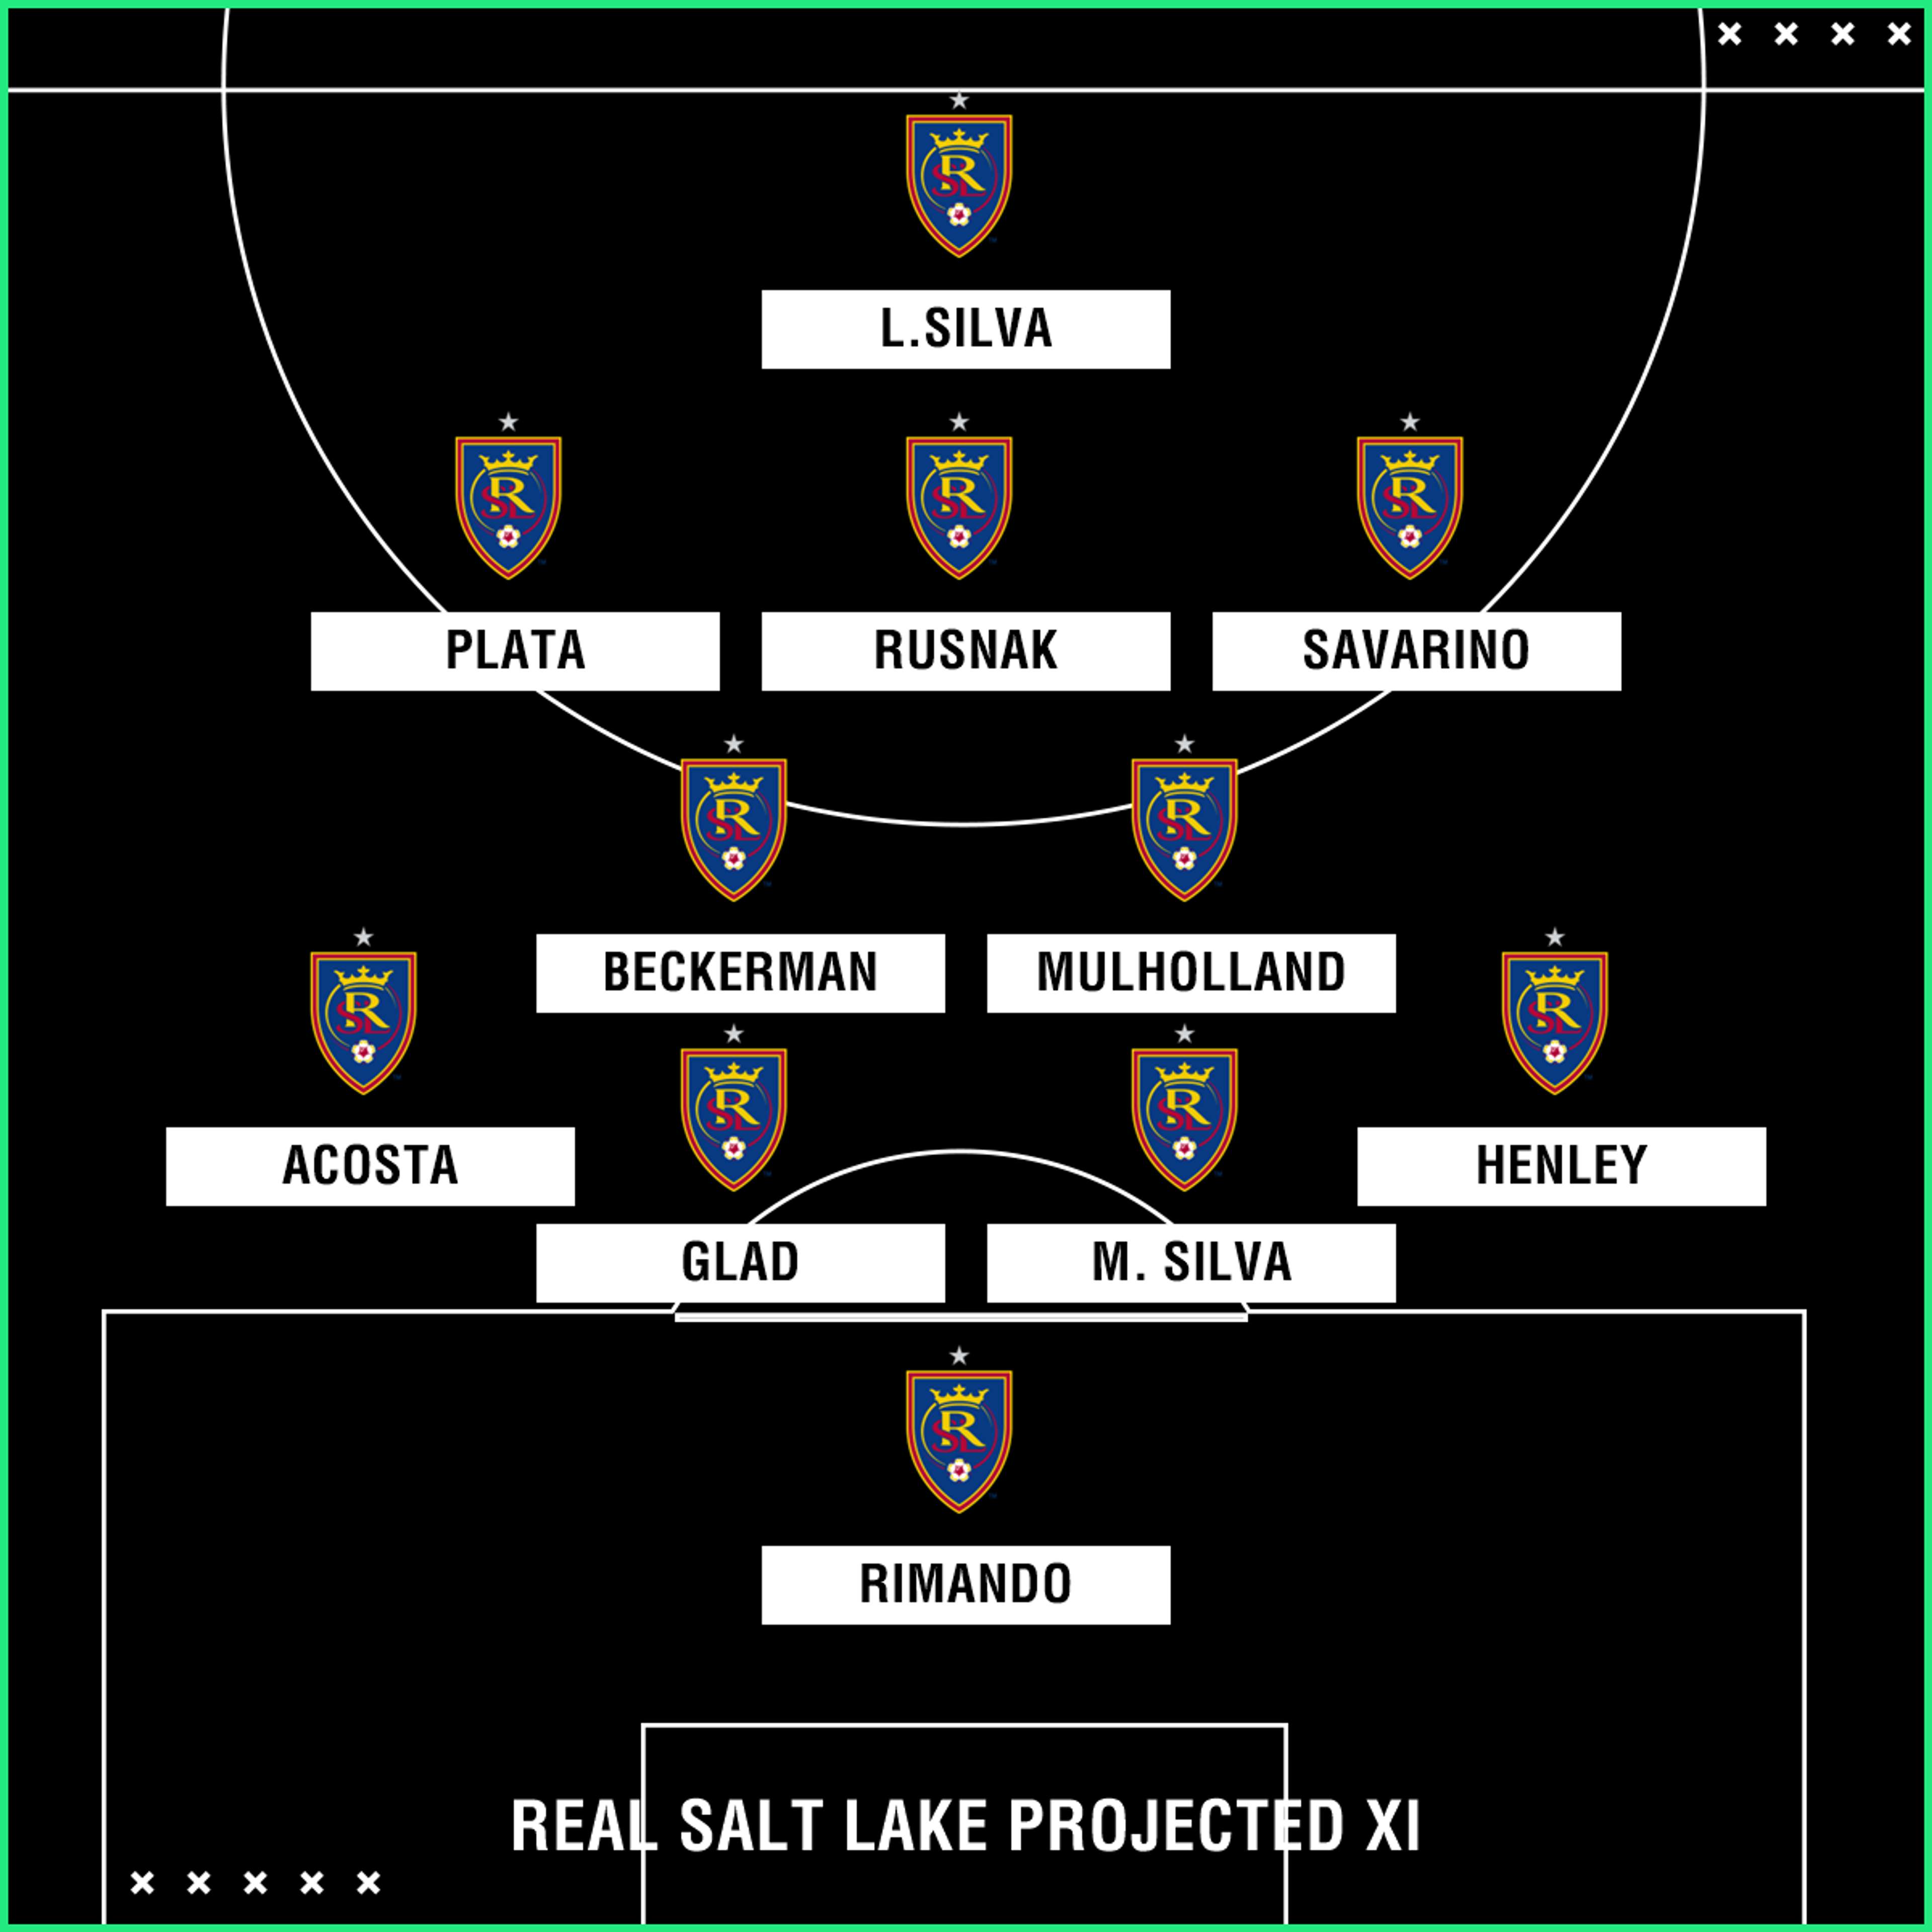 Real Salt Lake projected XI